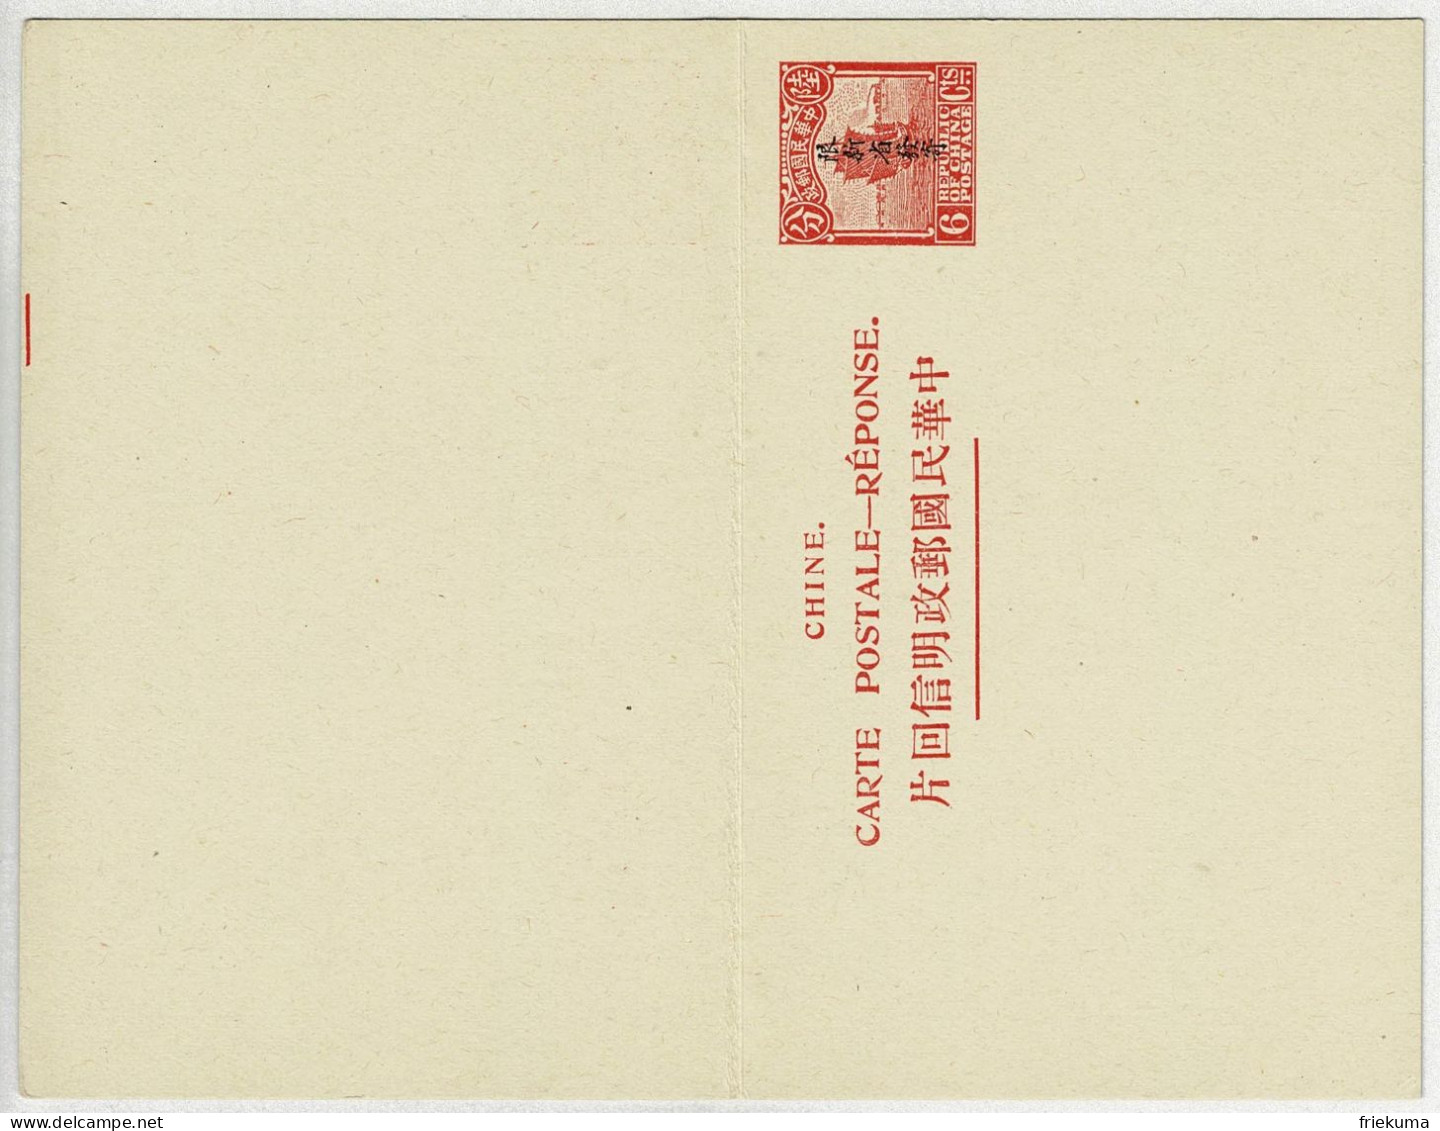 China Sinkiang, Carte Postale Avec Réponse Payée / Antwortpostkarte / Stationery  - Sinkiang 1915-49